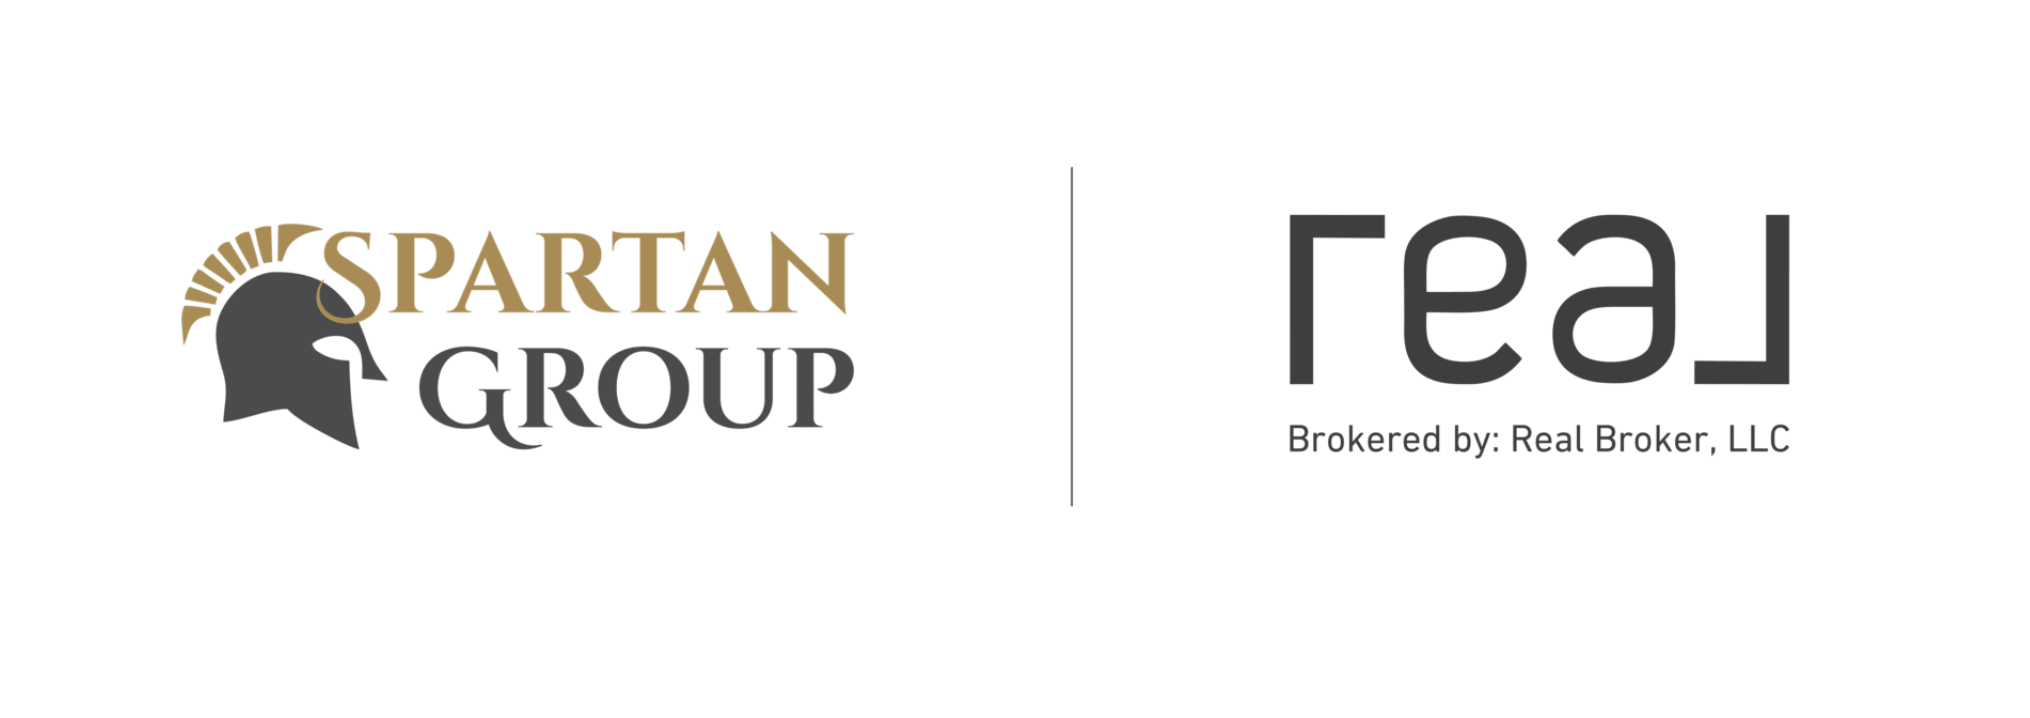 Spartan Group, REAL Broker, LLC